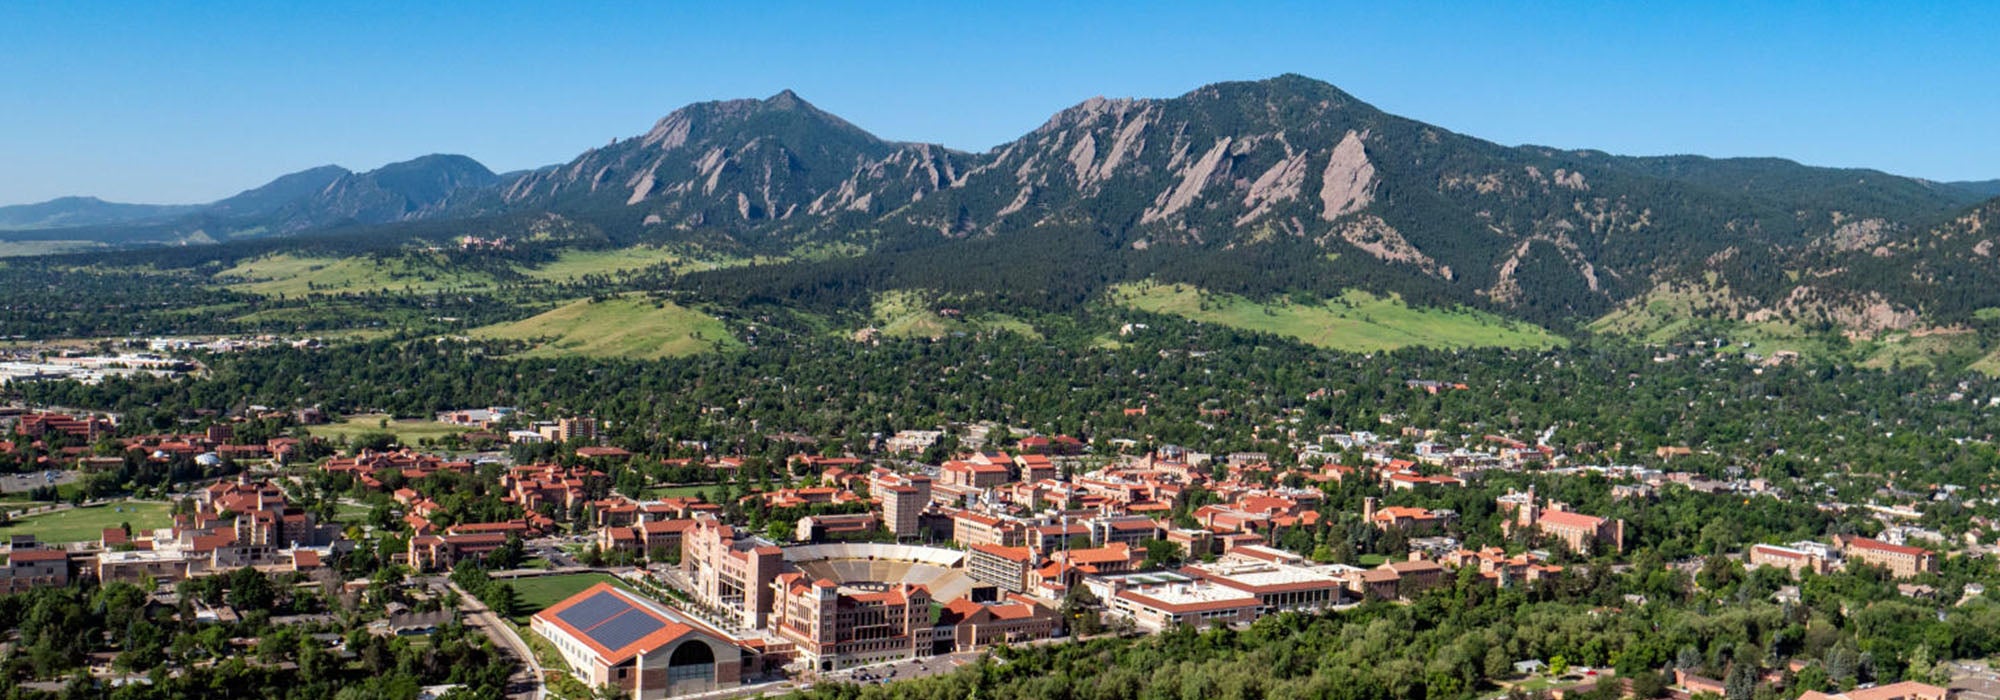 aerial view of CU Boulder campus